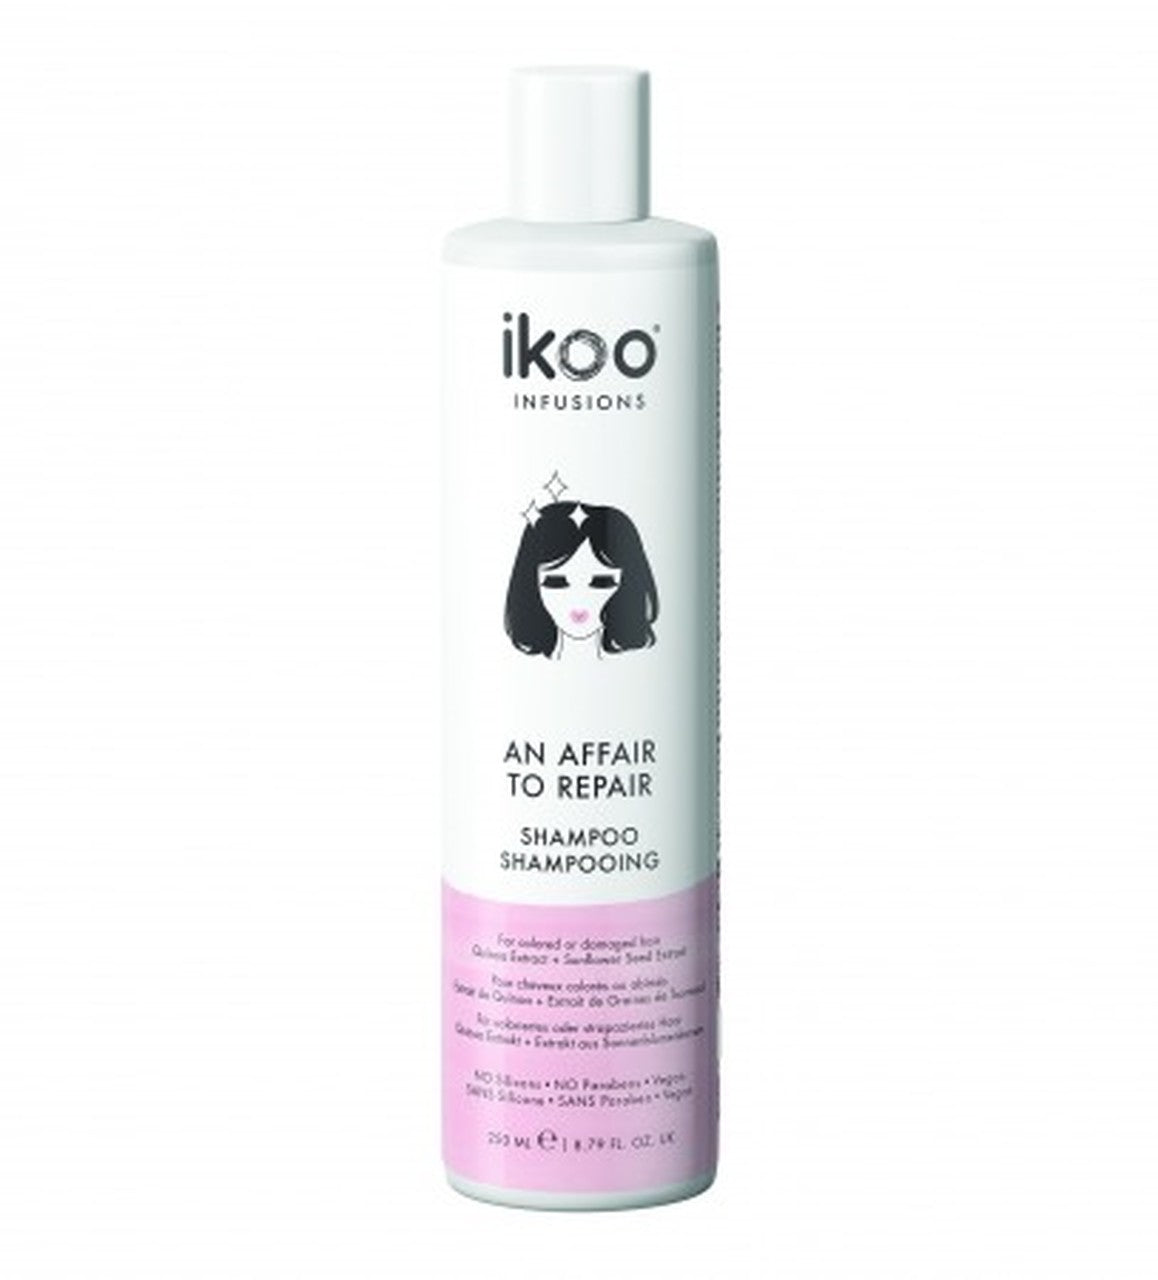 Ikoo Infusions An Affair To Repair Shampoo